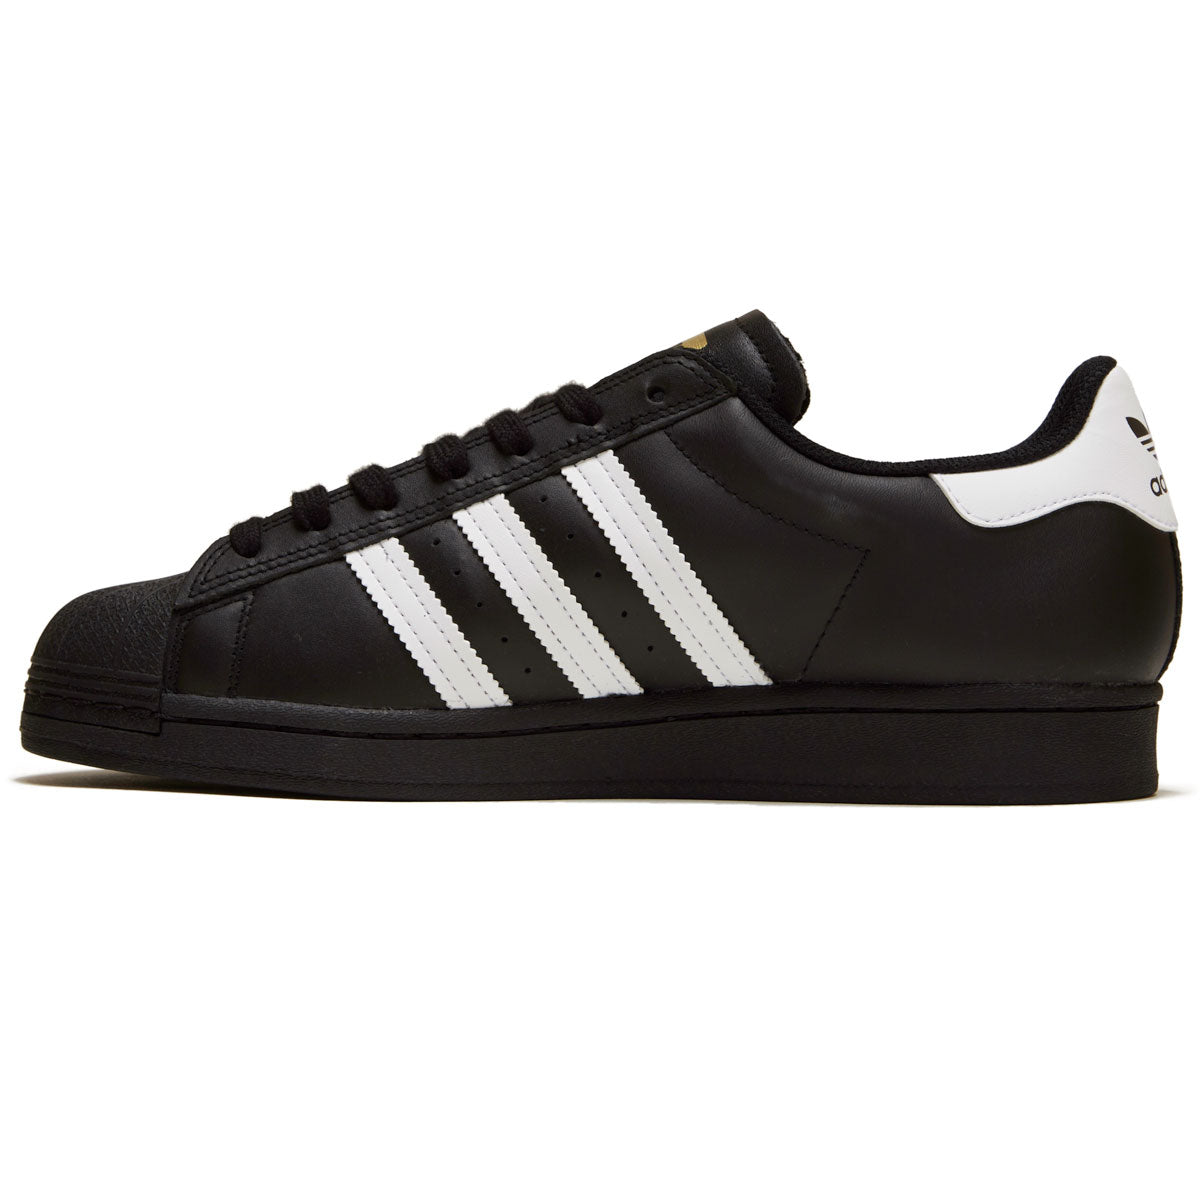 Adidas Superstar Adv Shoes - Core Black/White/White image 2